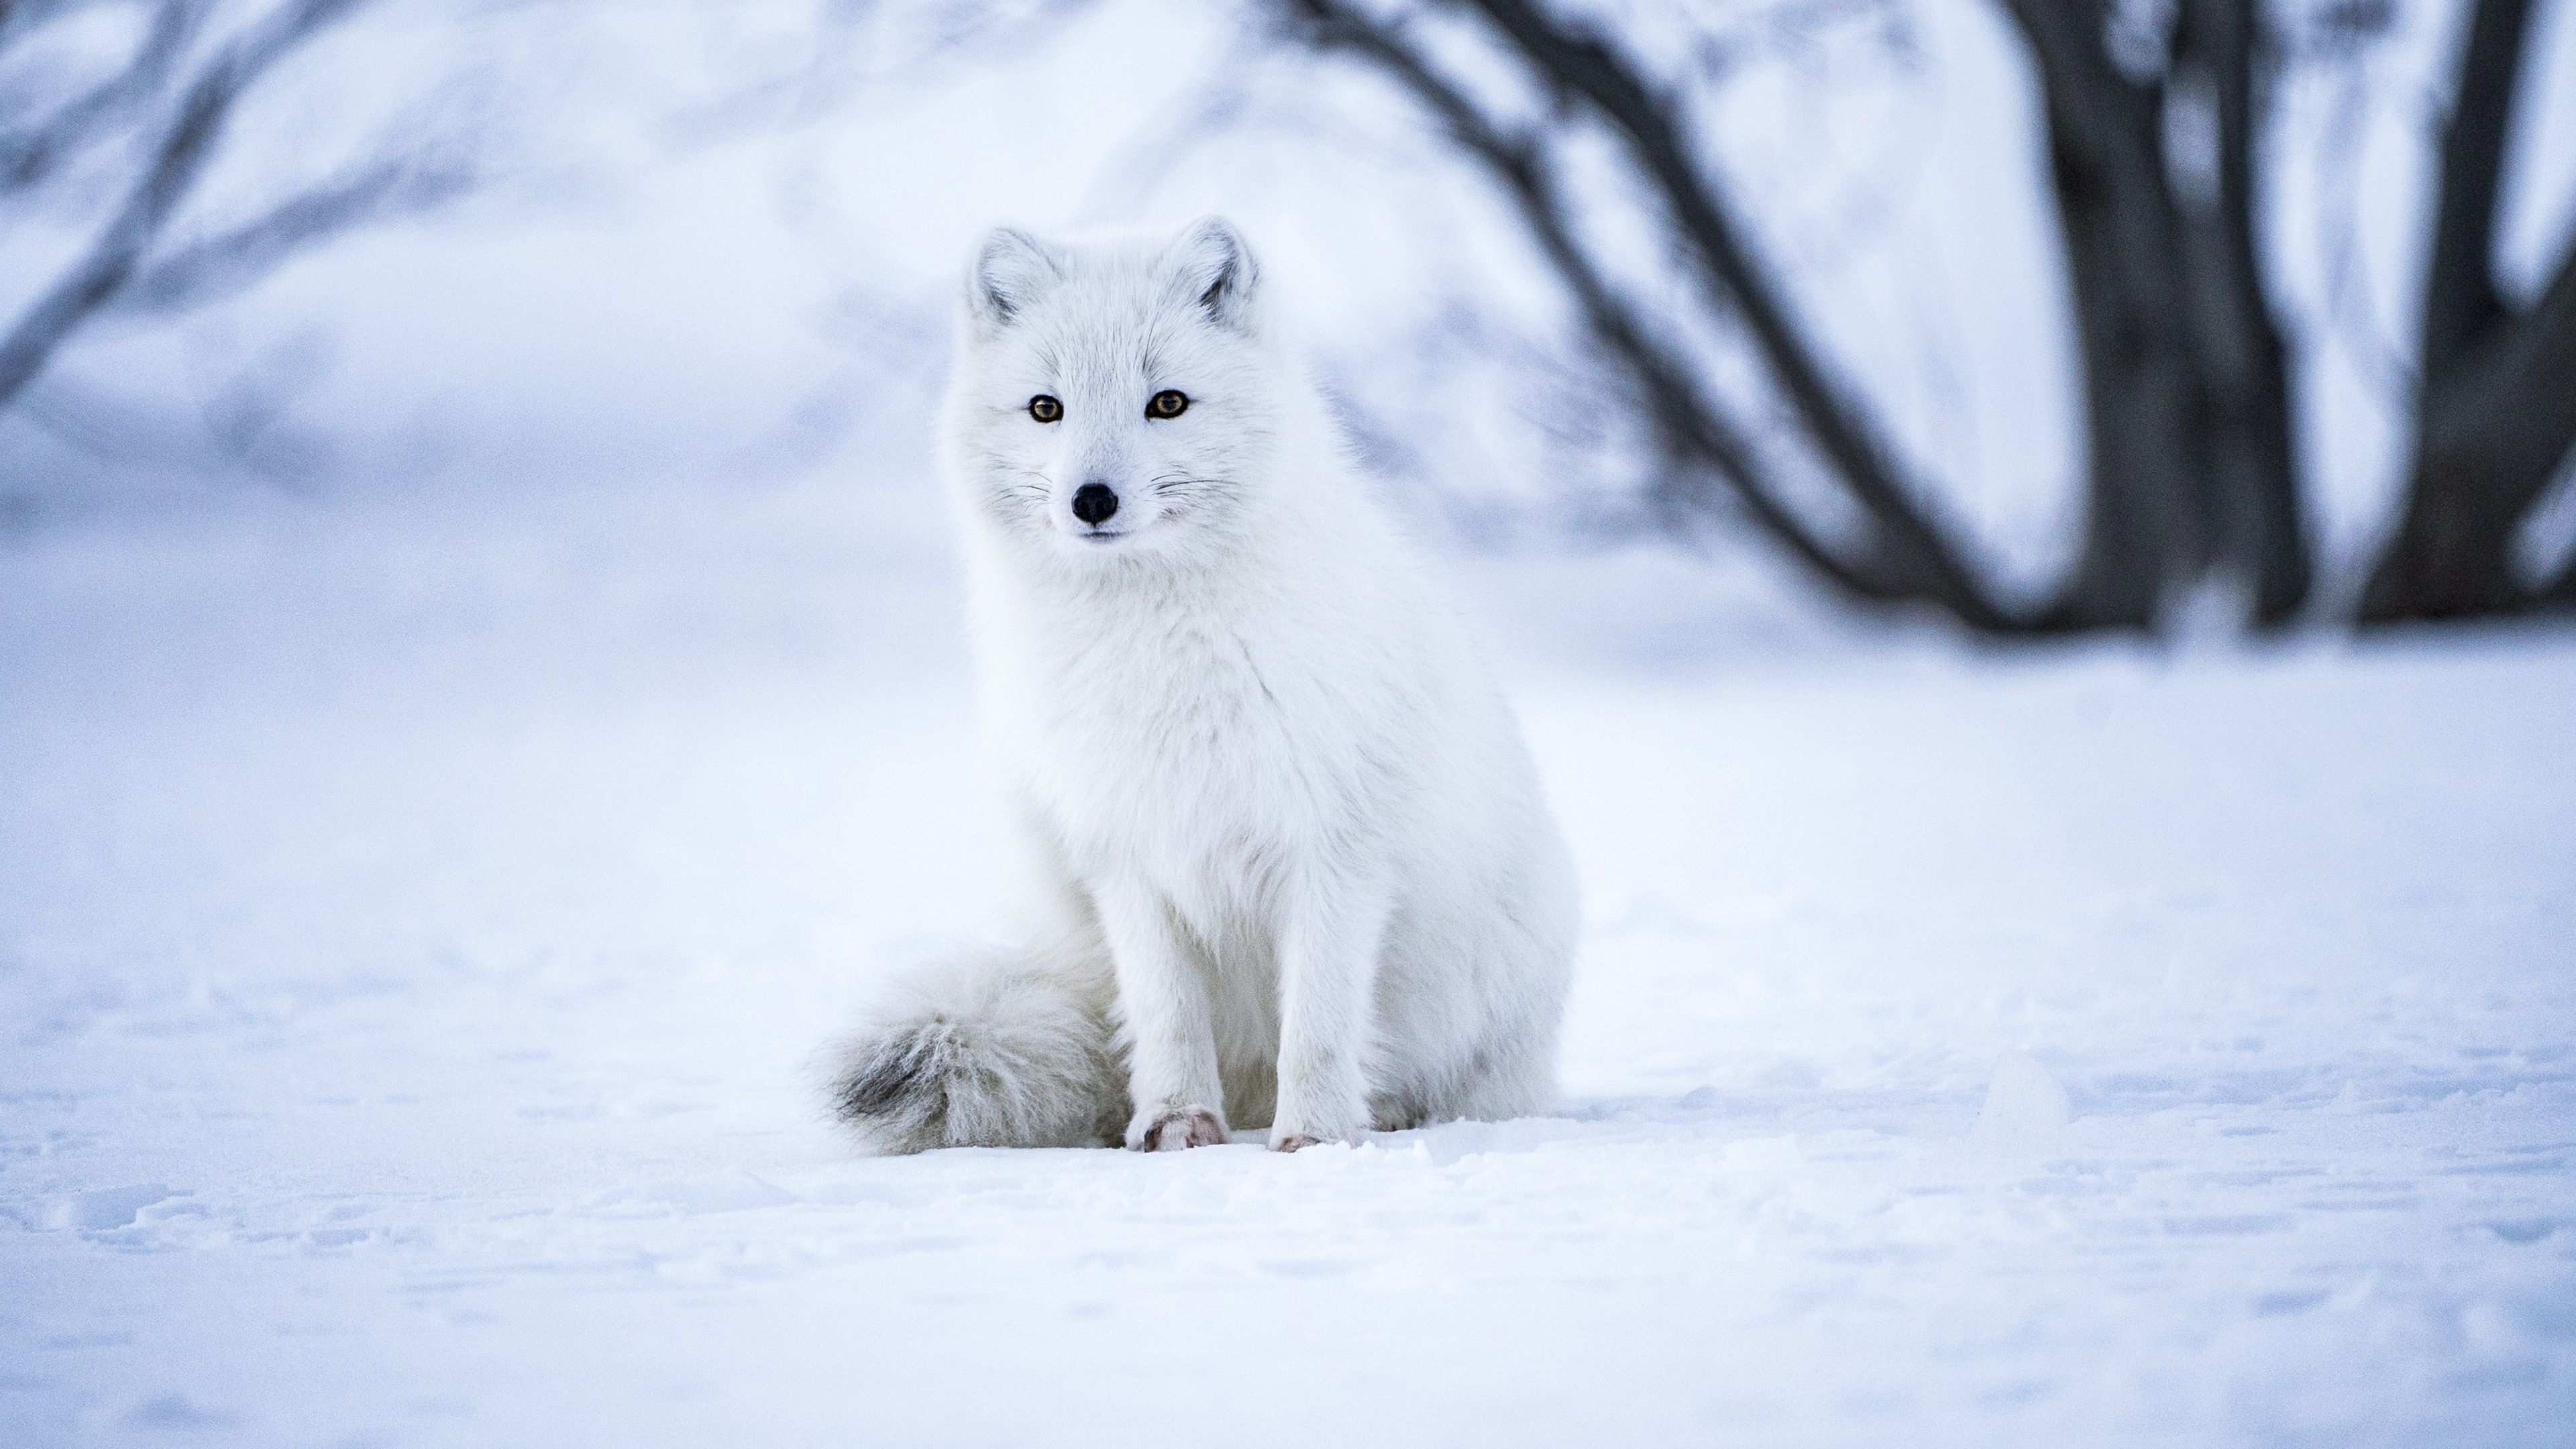 Arctic fox, White wolf, Iceland, Snow field, Selective Focus, Mammal, Wildlife, 4k Free deskk wallpaper, Ultra HD